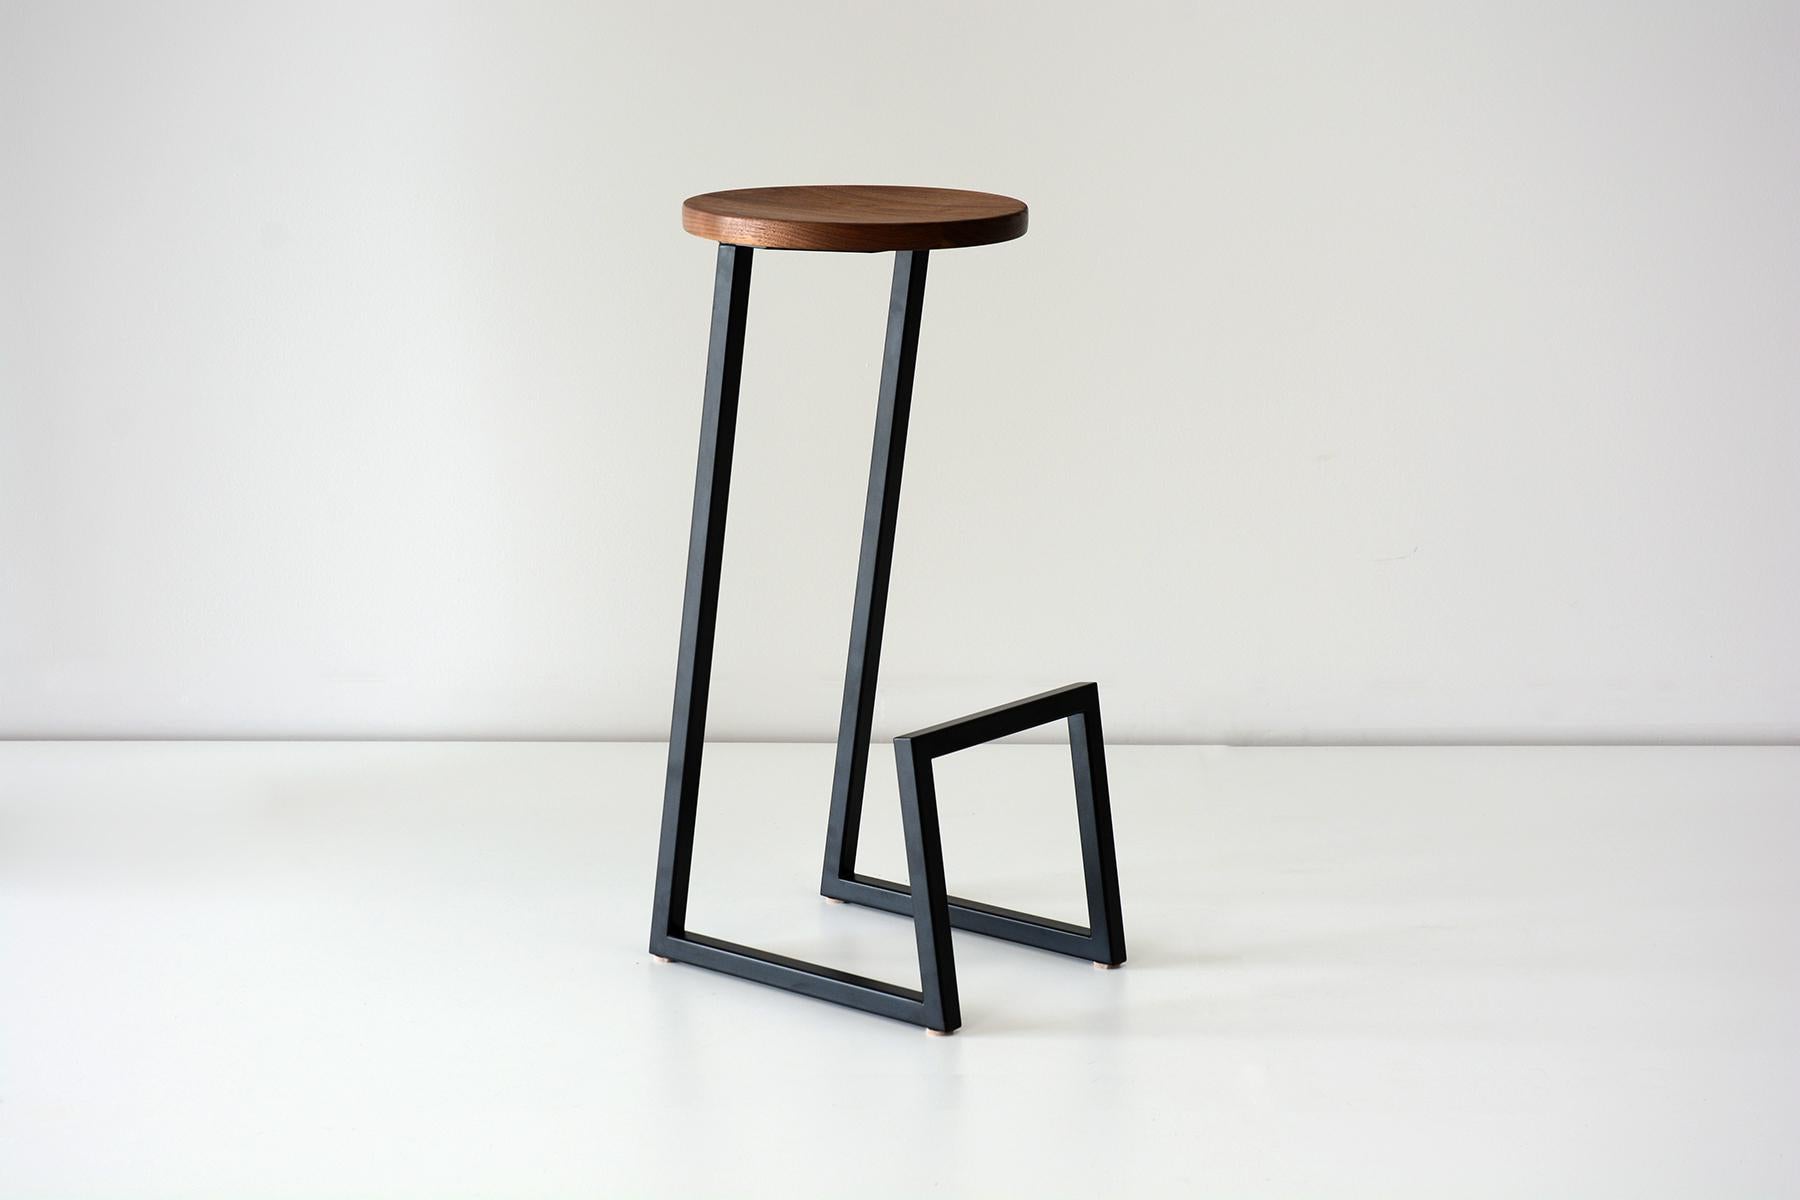 Walnut corktown stool bar by Hollis & Morris
Dimensions:
Seat diameter 13